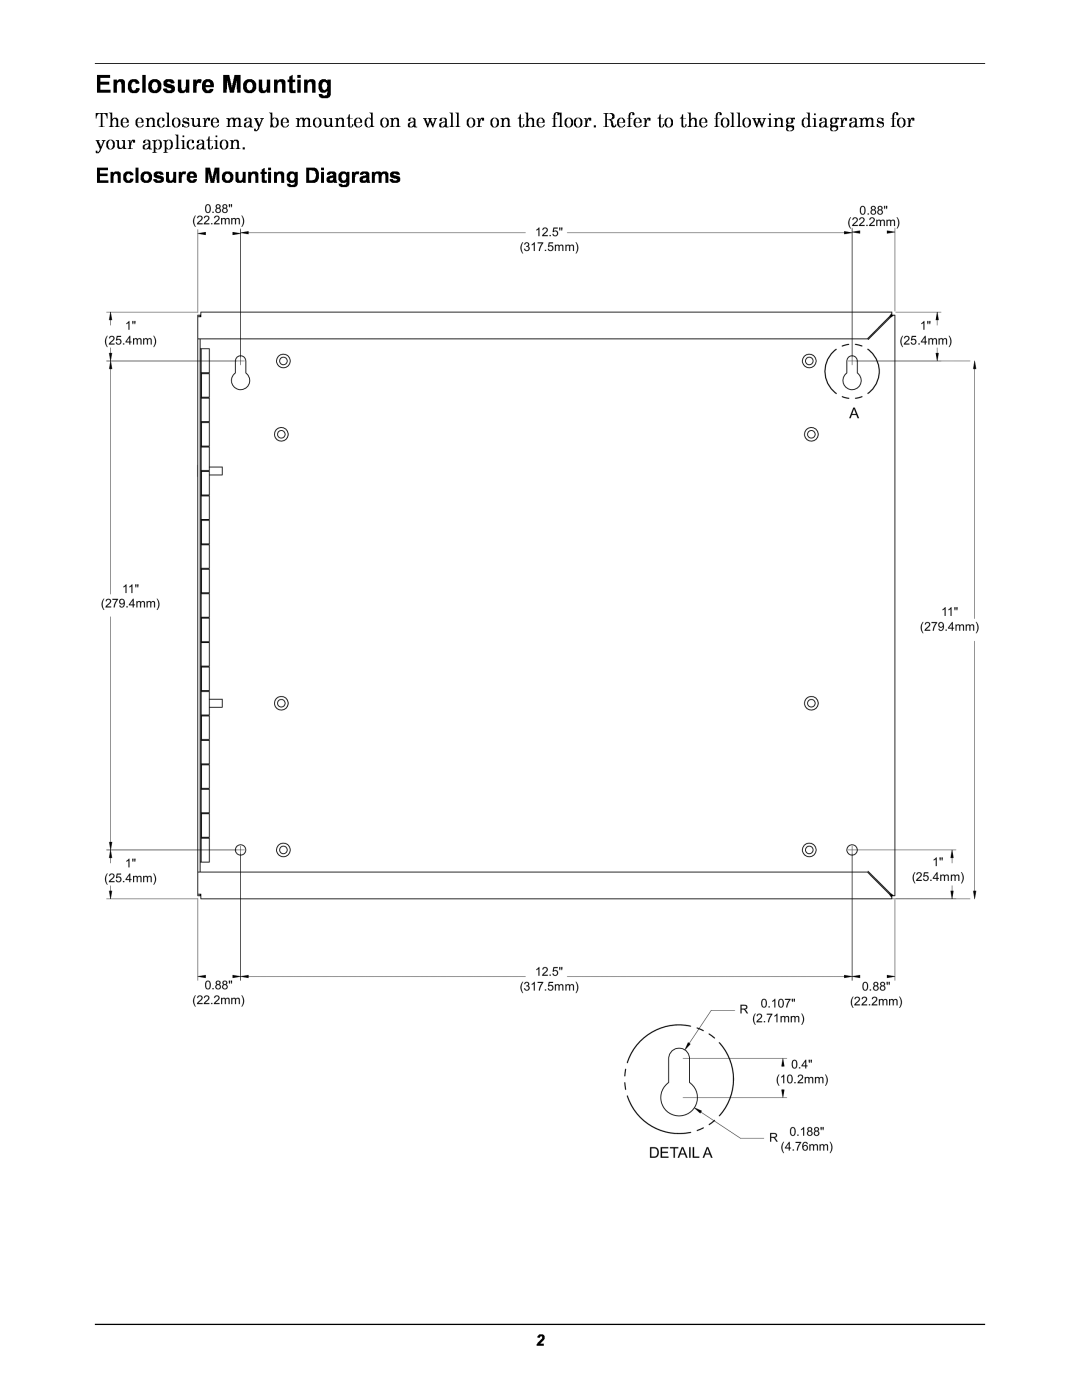 Emerson SiteLink-4E, SiteLink-2E, SiteLink-12E dimensions Enclosure Mounting Diagrams, Detail A 